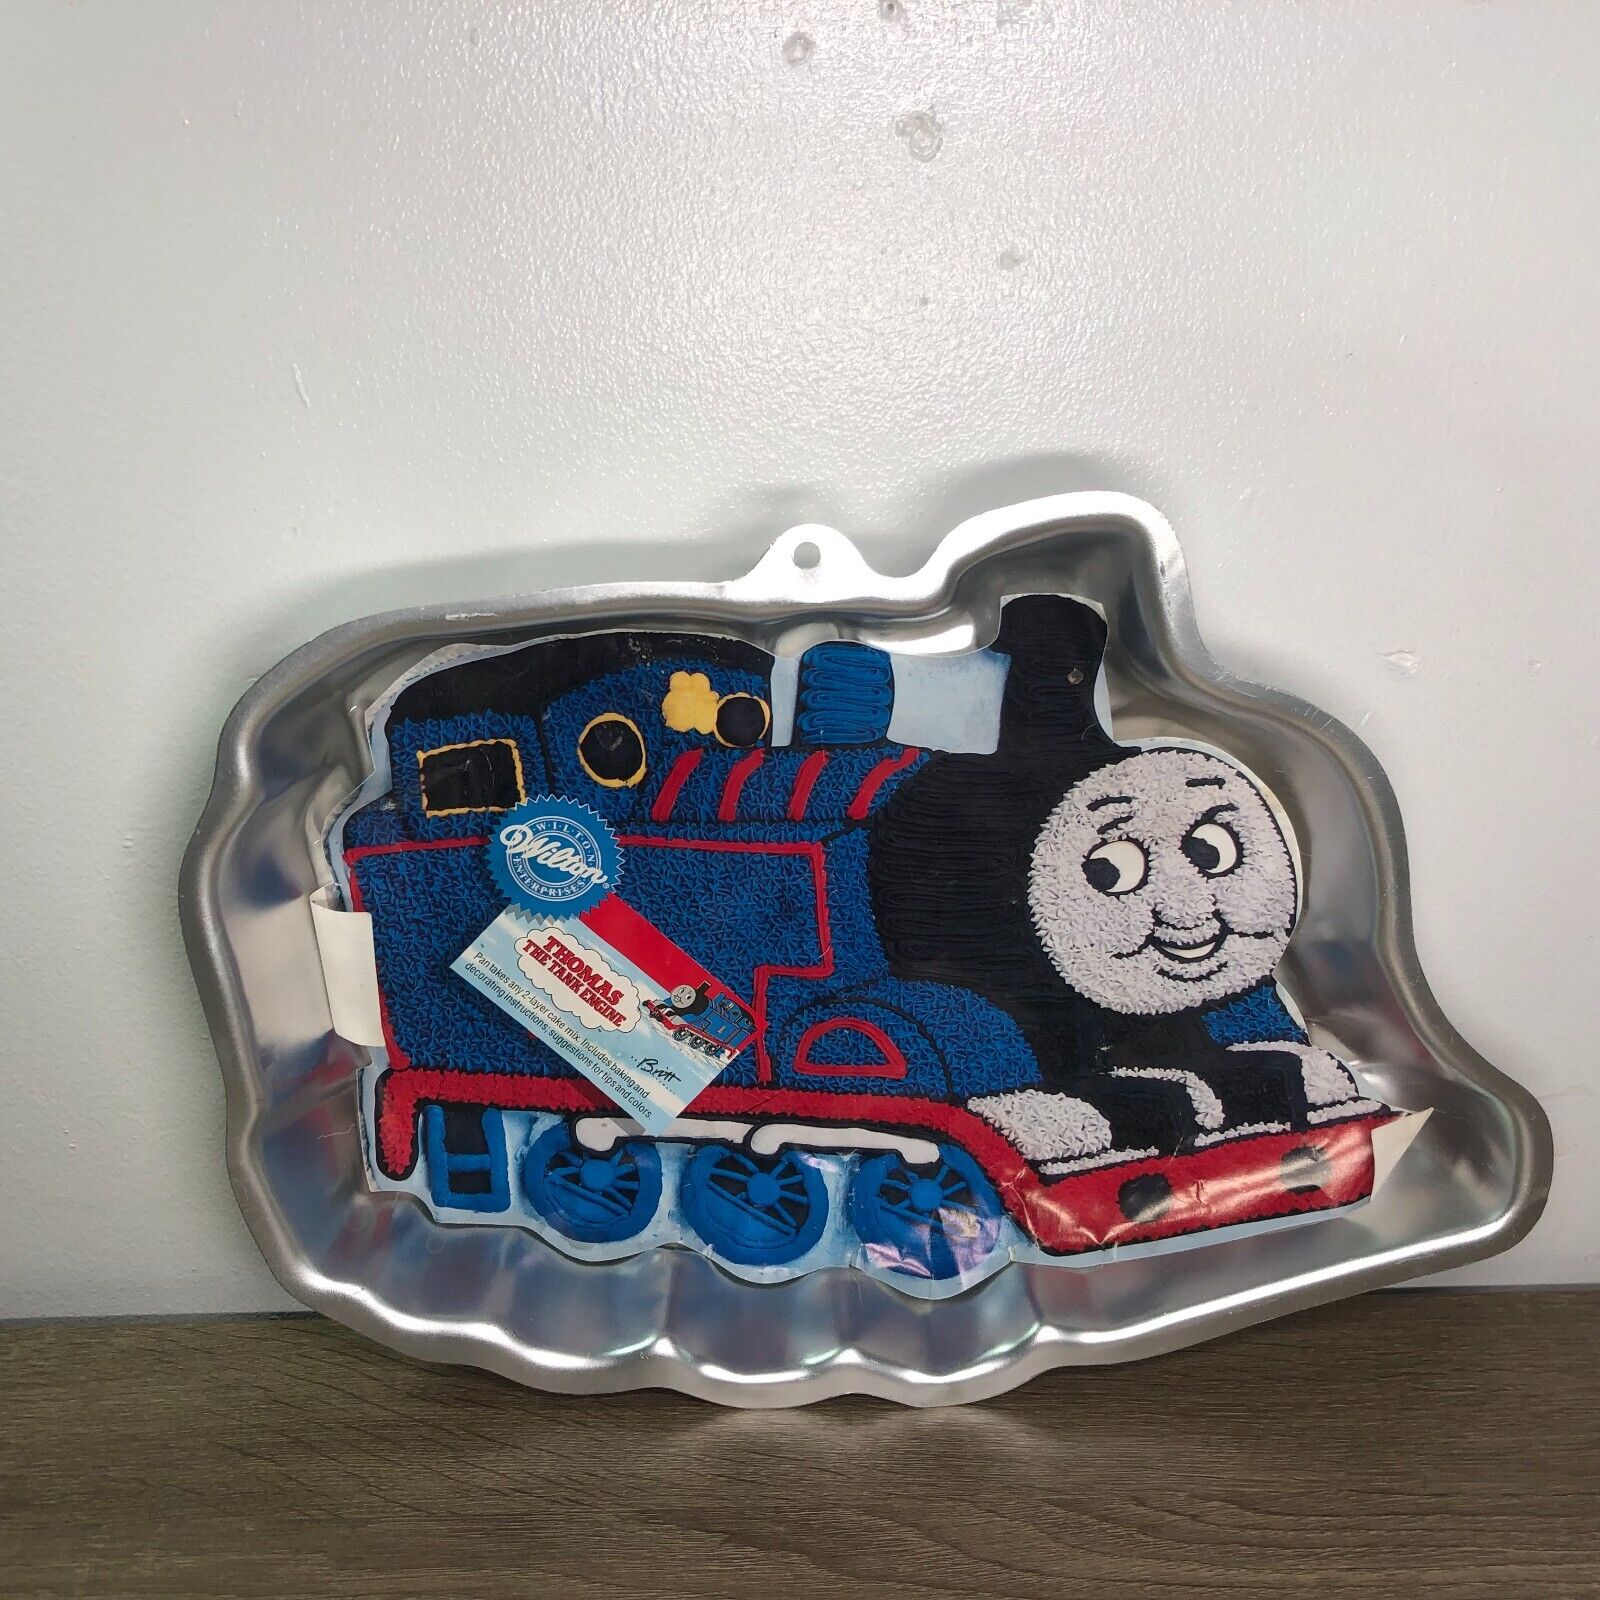 Thomas the Train Cake Pan Wilton Vintage 1994 Aluminum Baking Dish Mold Birthday